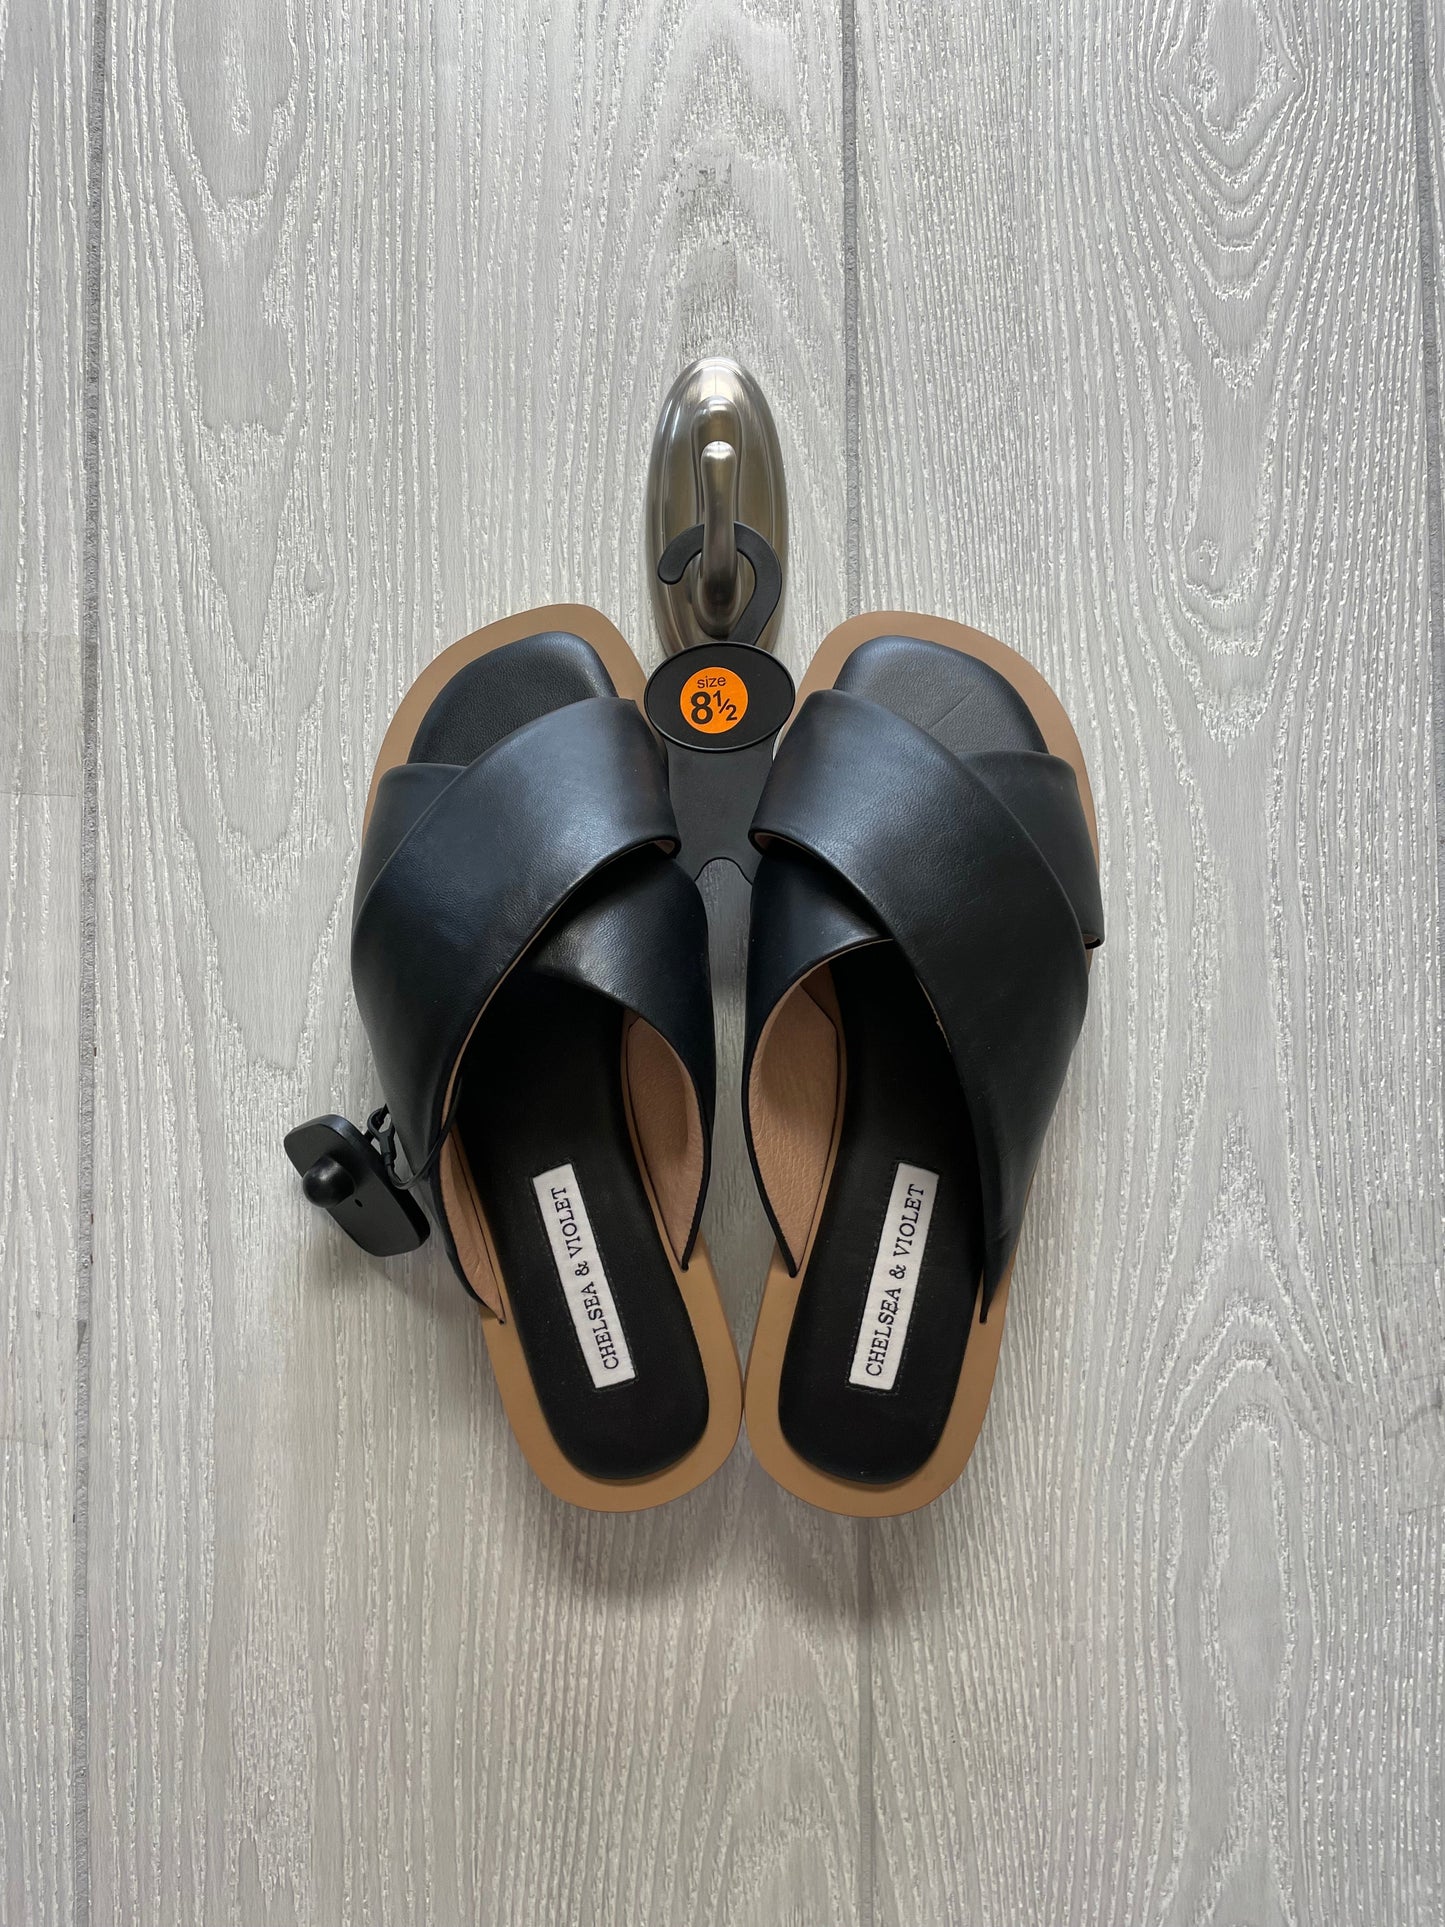 Black Sandals Flats Chelsea And Violet, Size 8.5